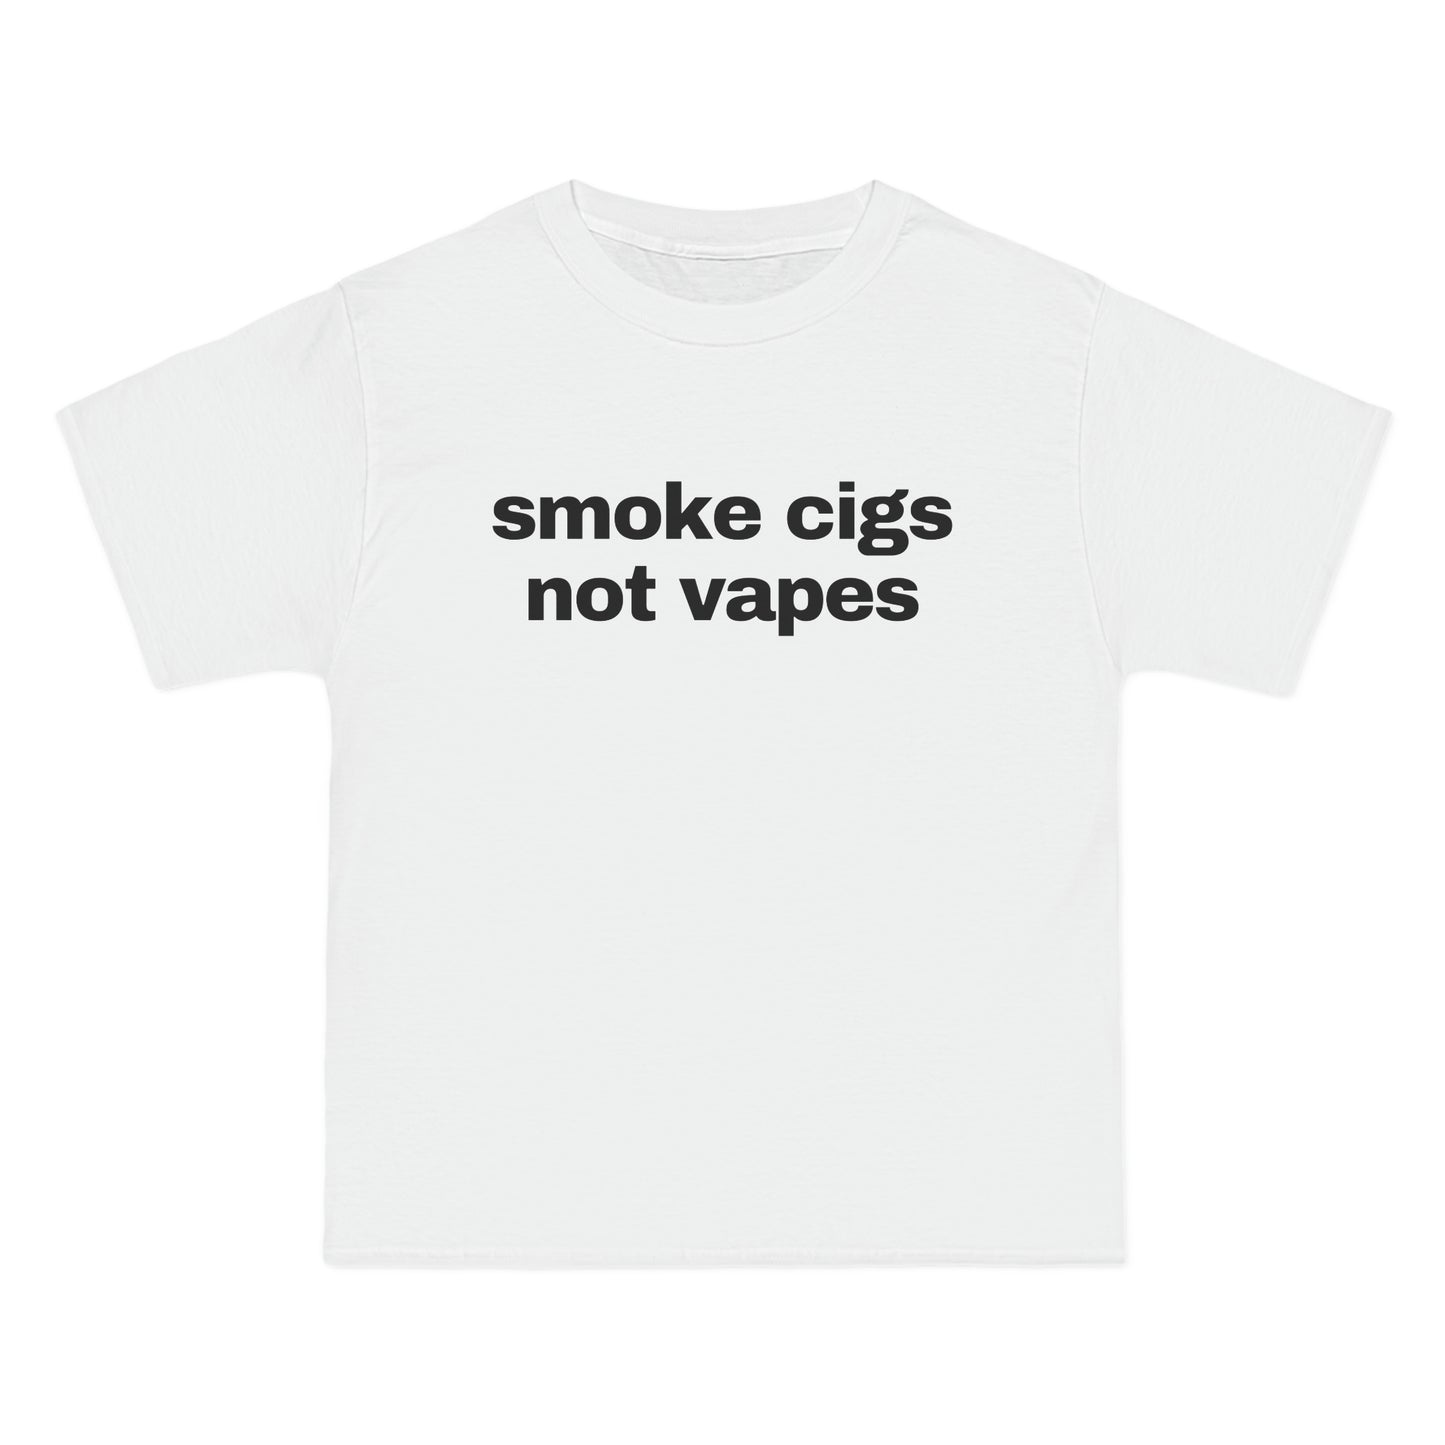 smoke cigs not vapes Tee